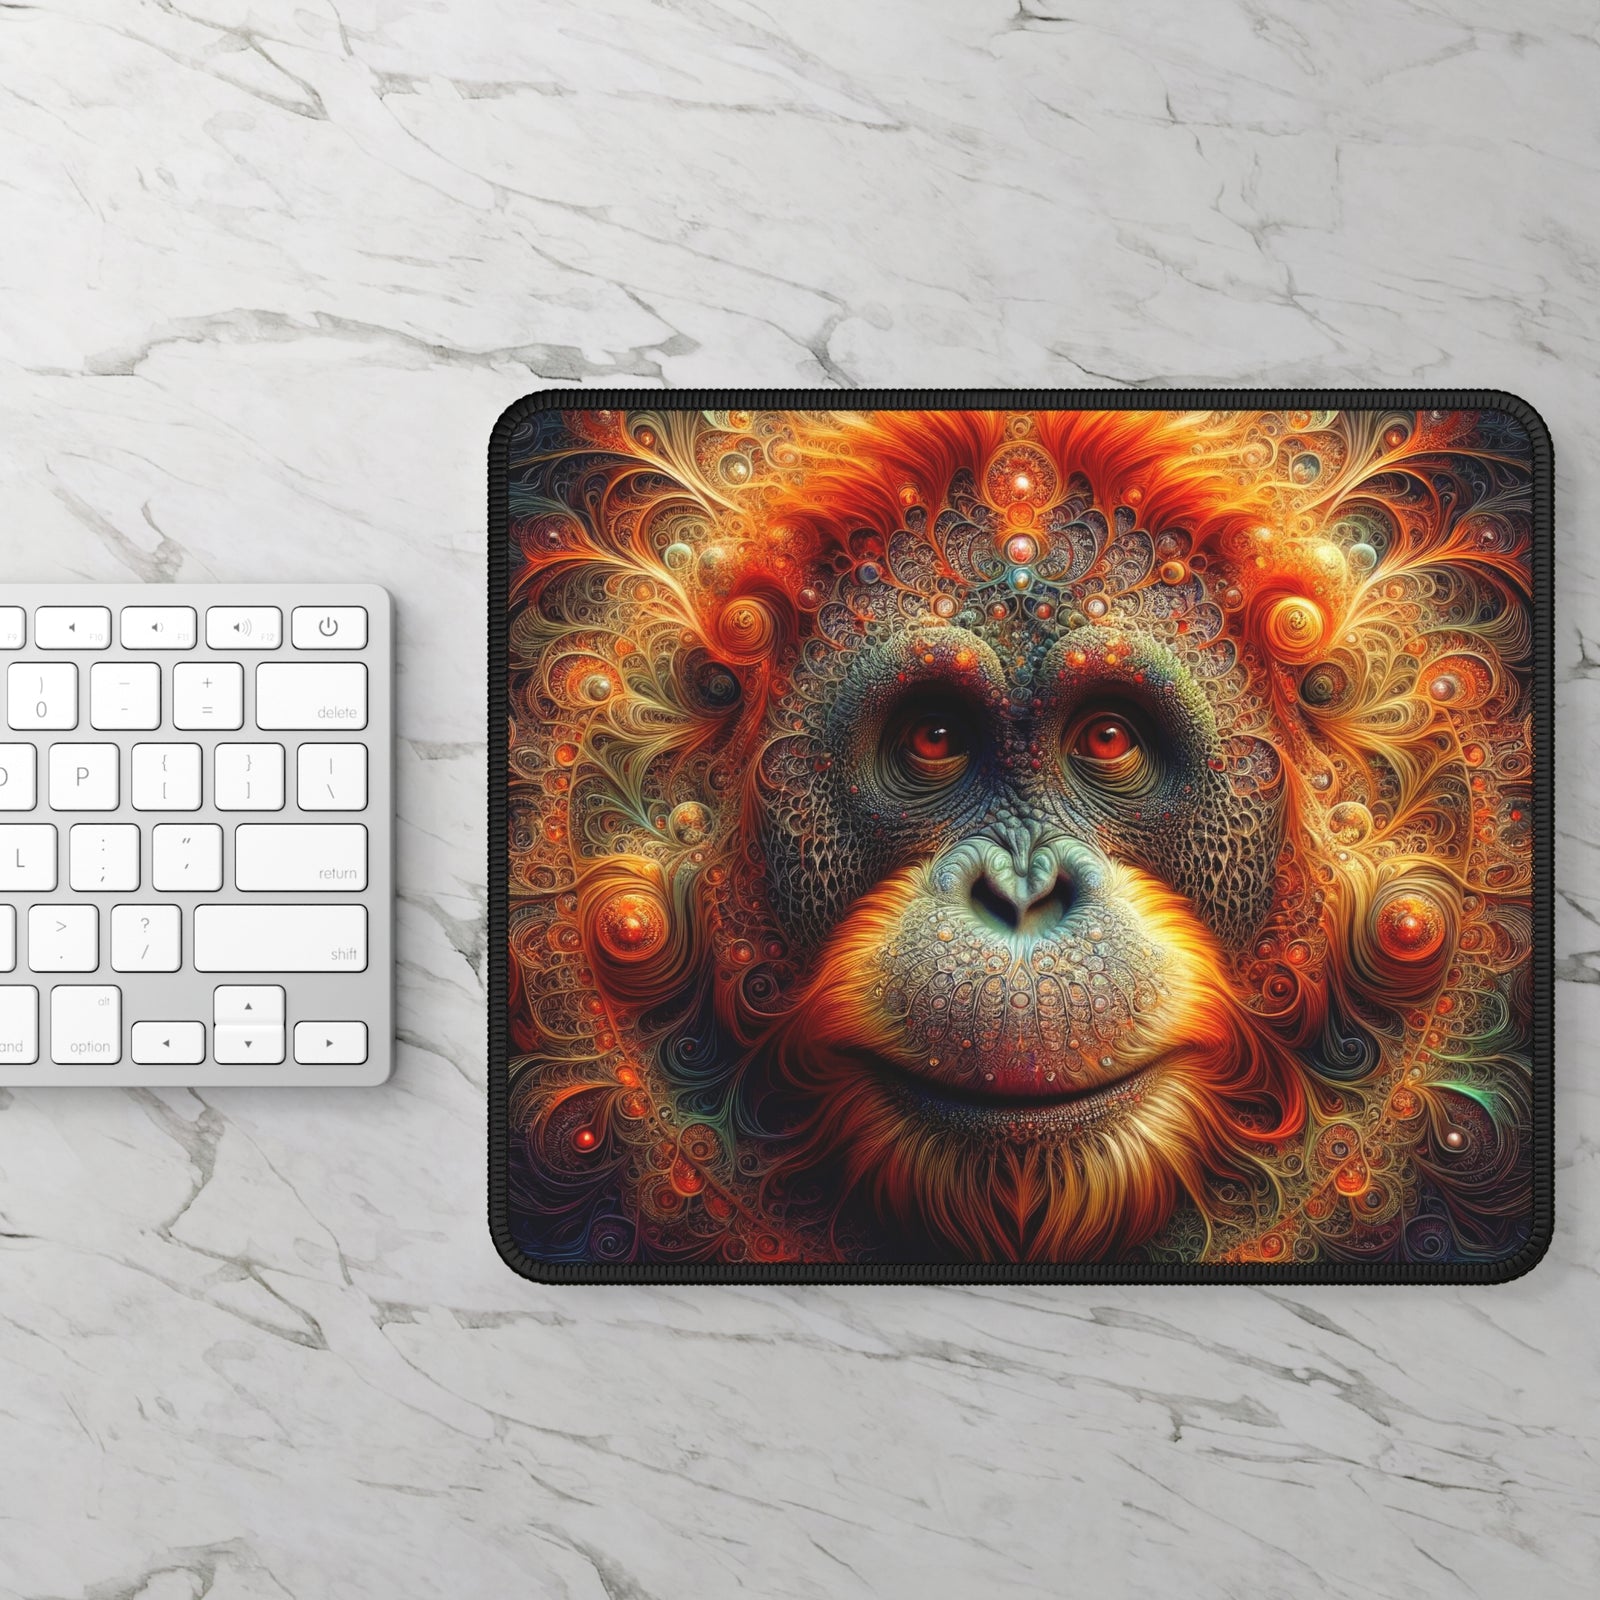 The Fractal Orangutan Gaming Mouse Pad